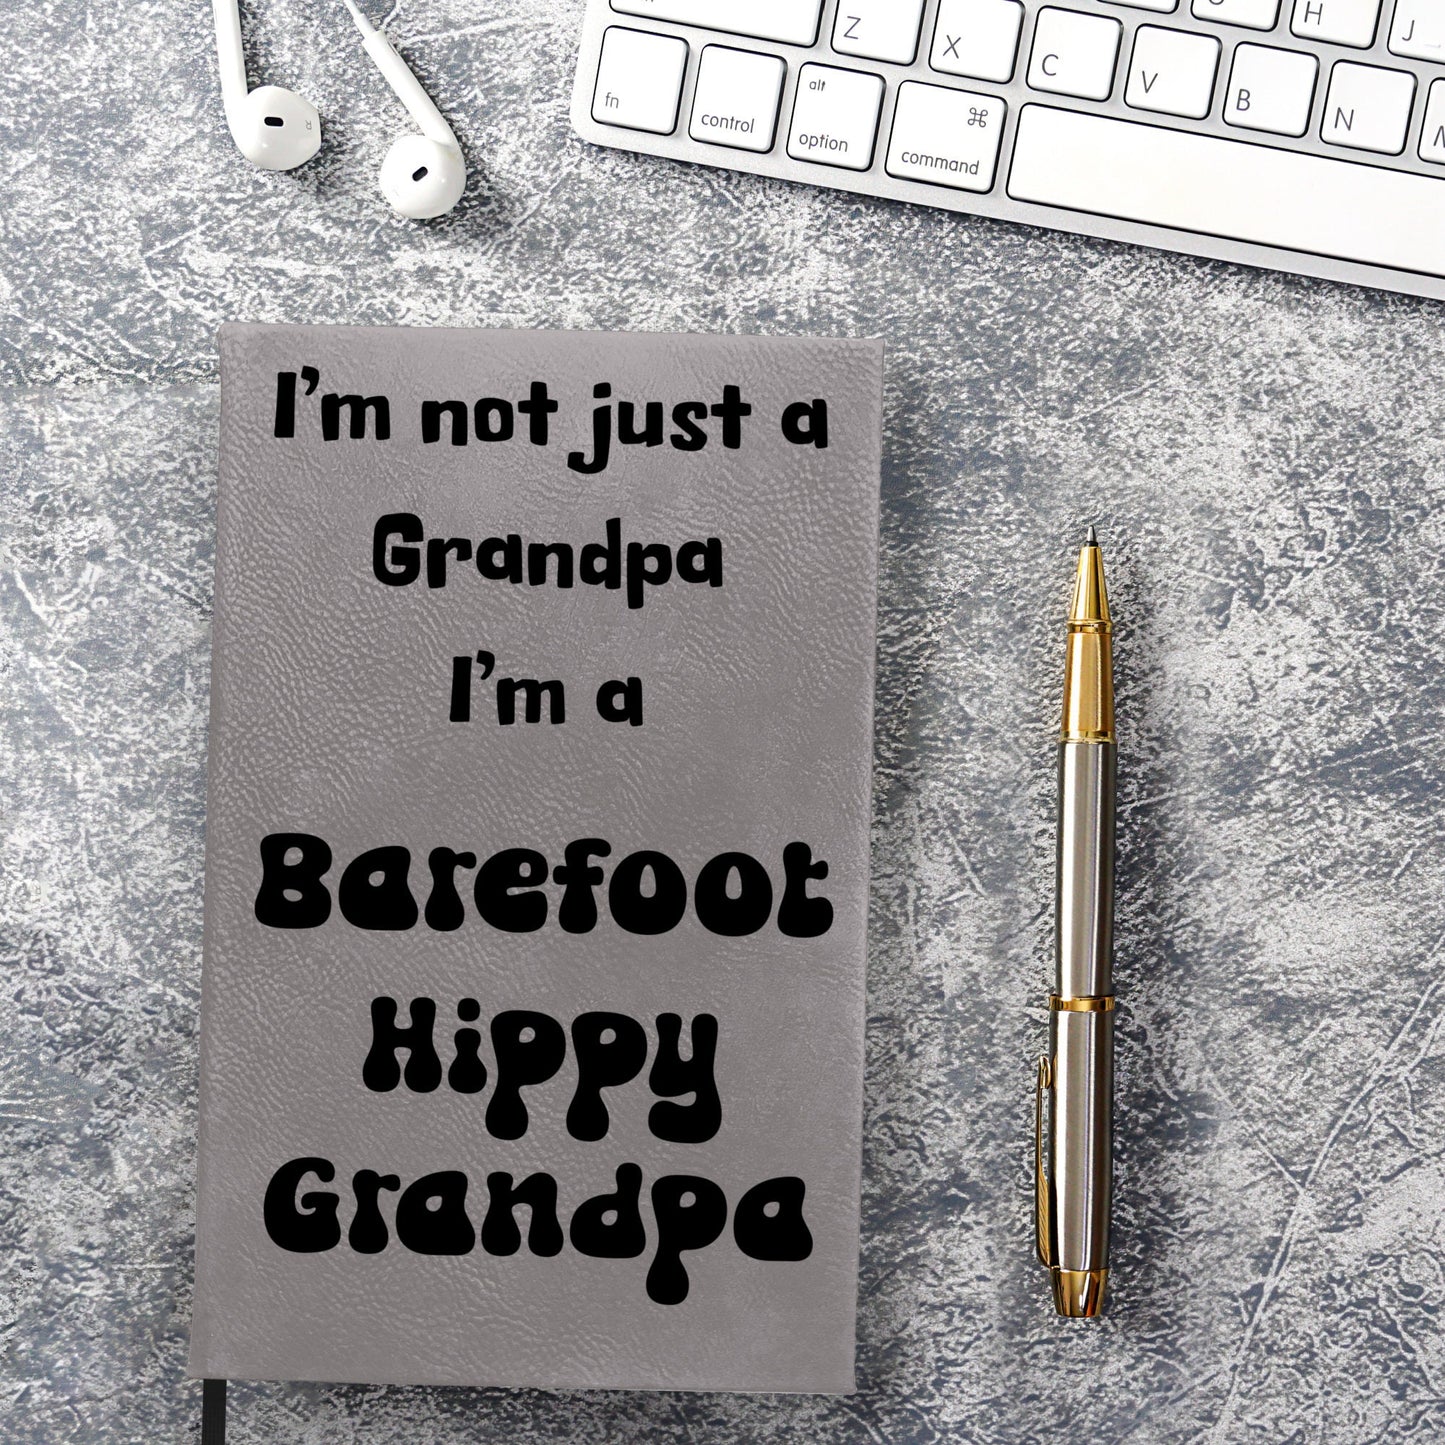 Barefoot Hippy Grandpa